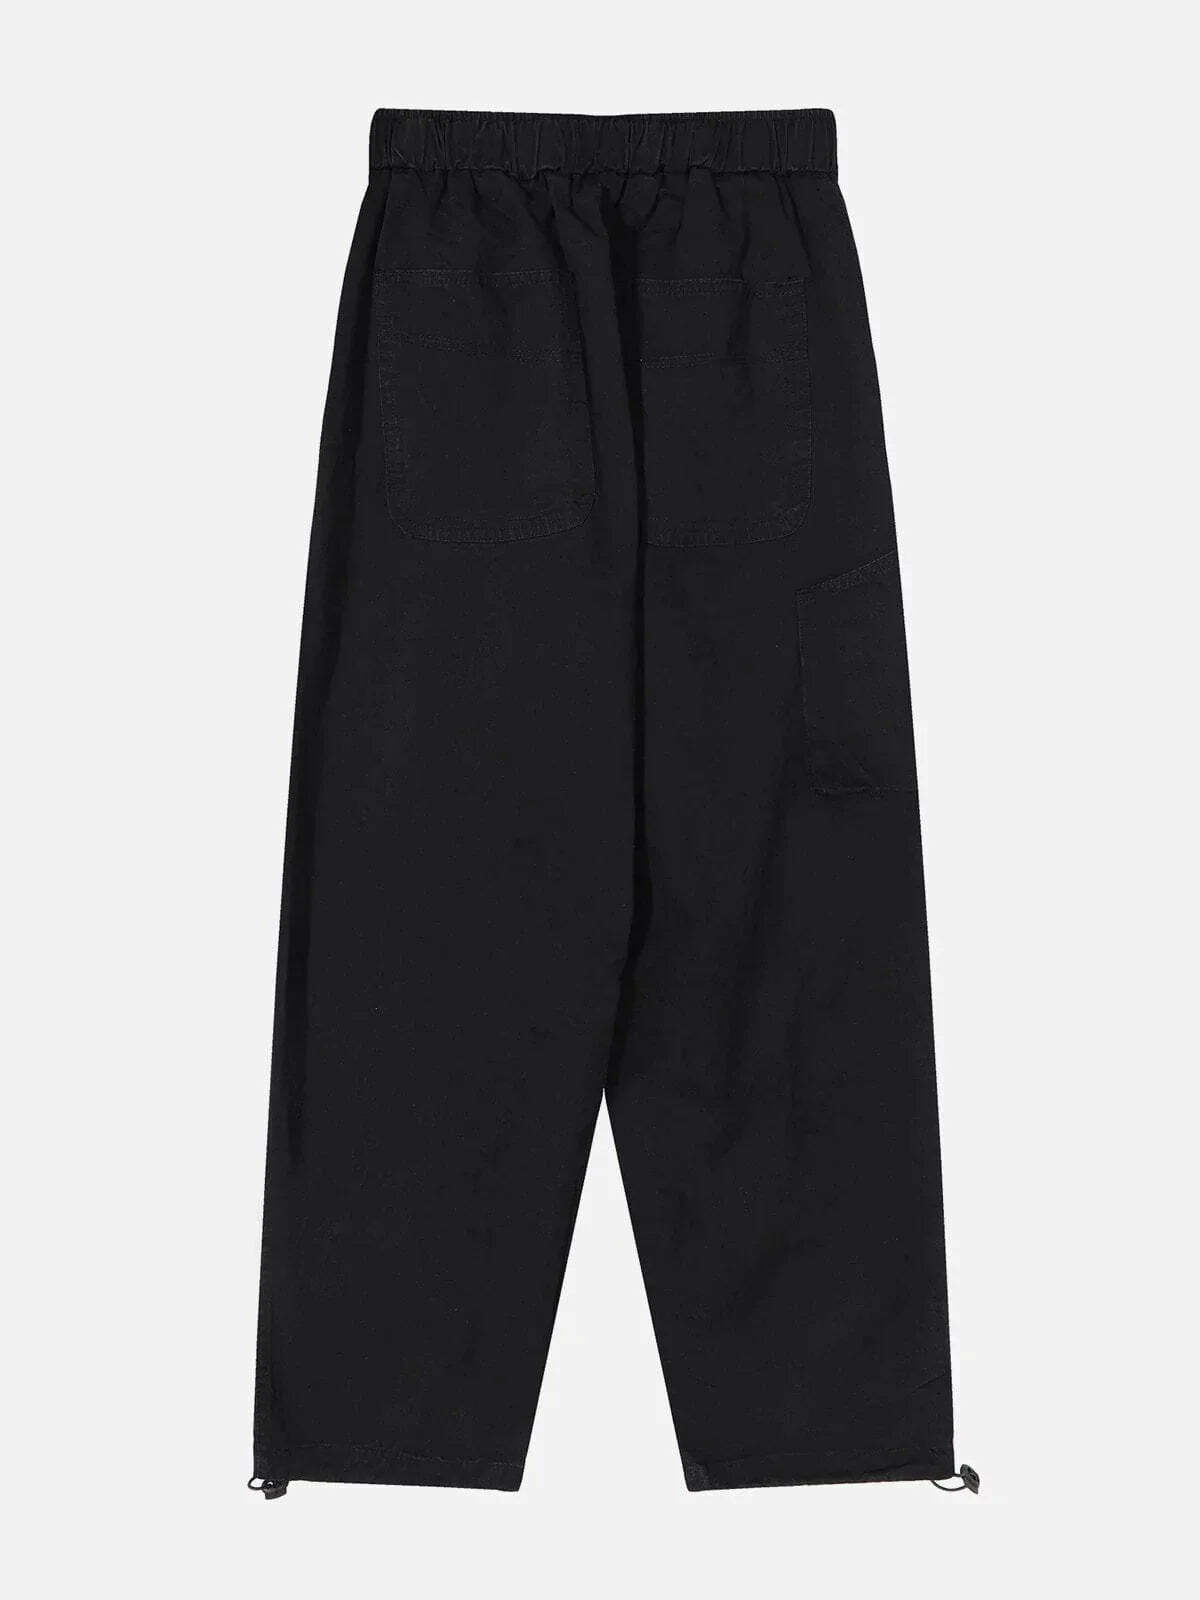 dynamic elastic waistband pants 8709